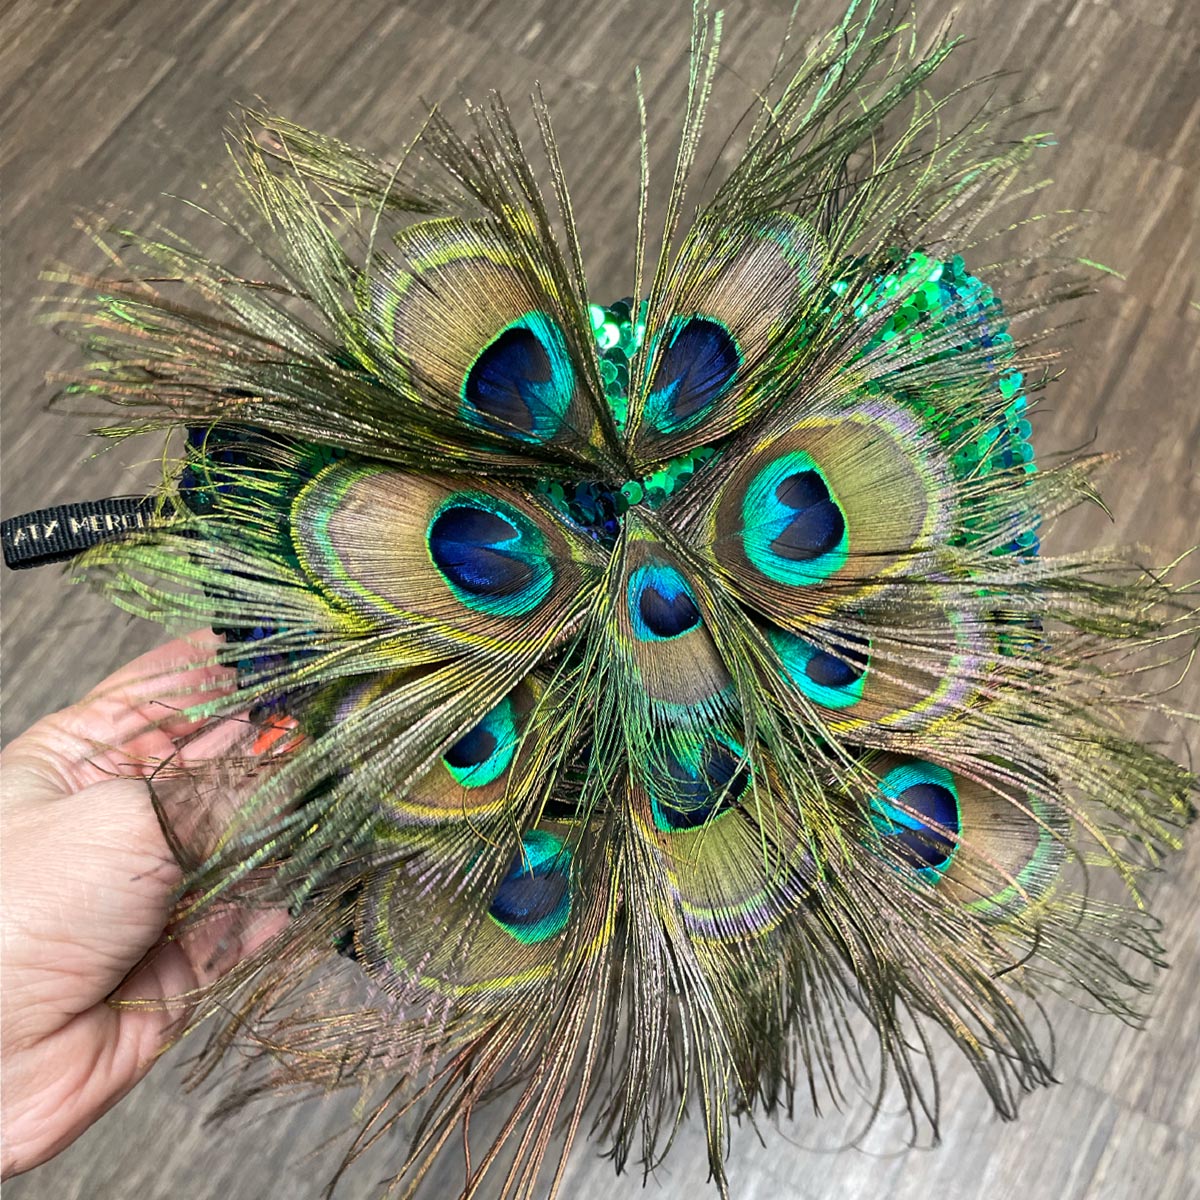 Pfauenfedern Wechselklappe StyleCOVER Peacock feathers for KATY MERCURY Bags wandelbare Handtaschen